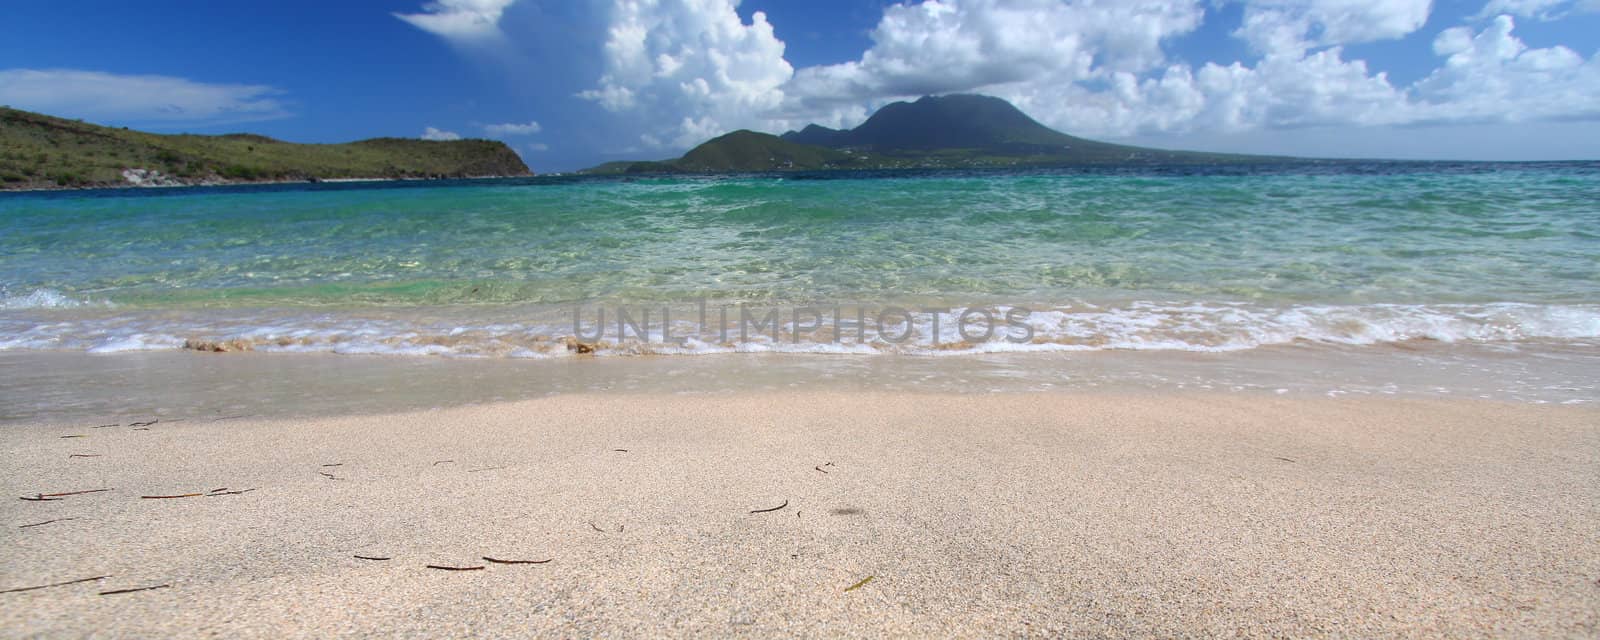 Beautiful beach on Saint Kitts by Wirepec